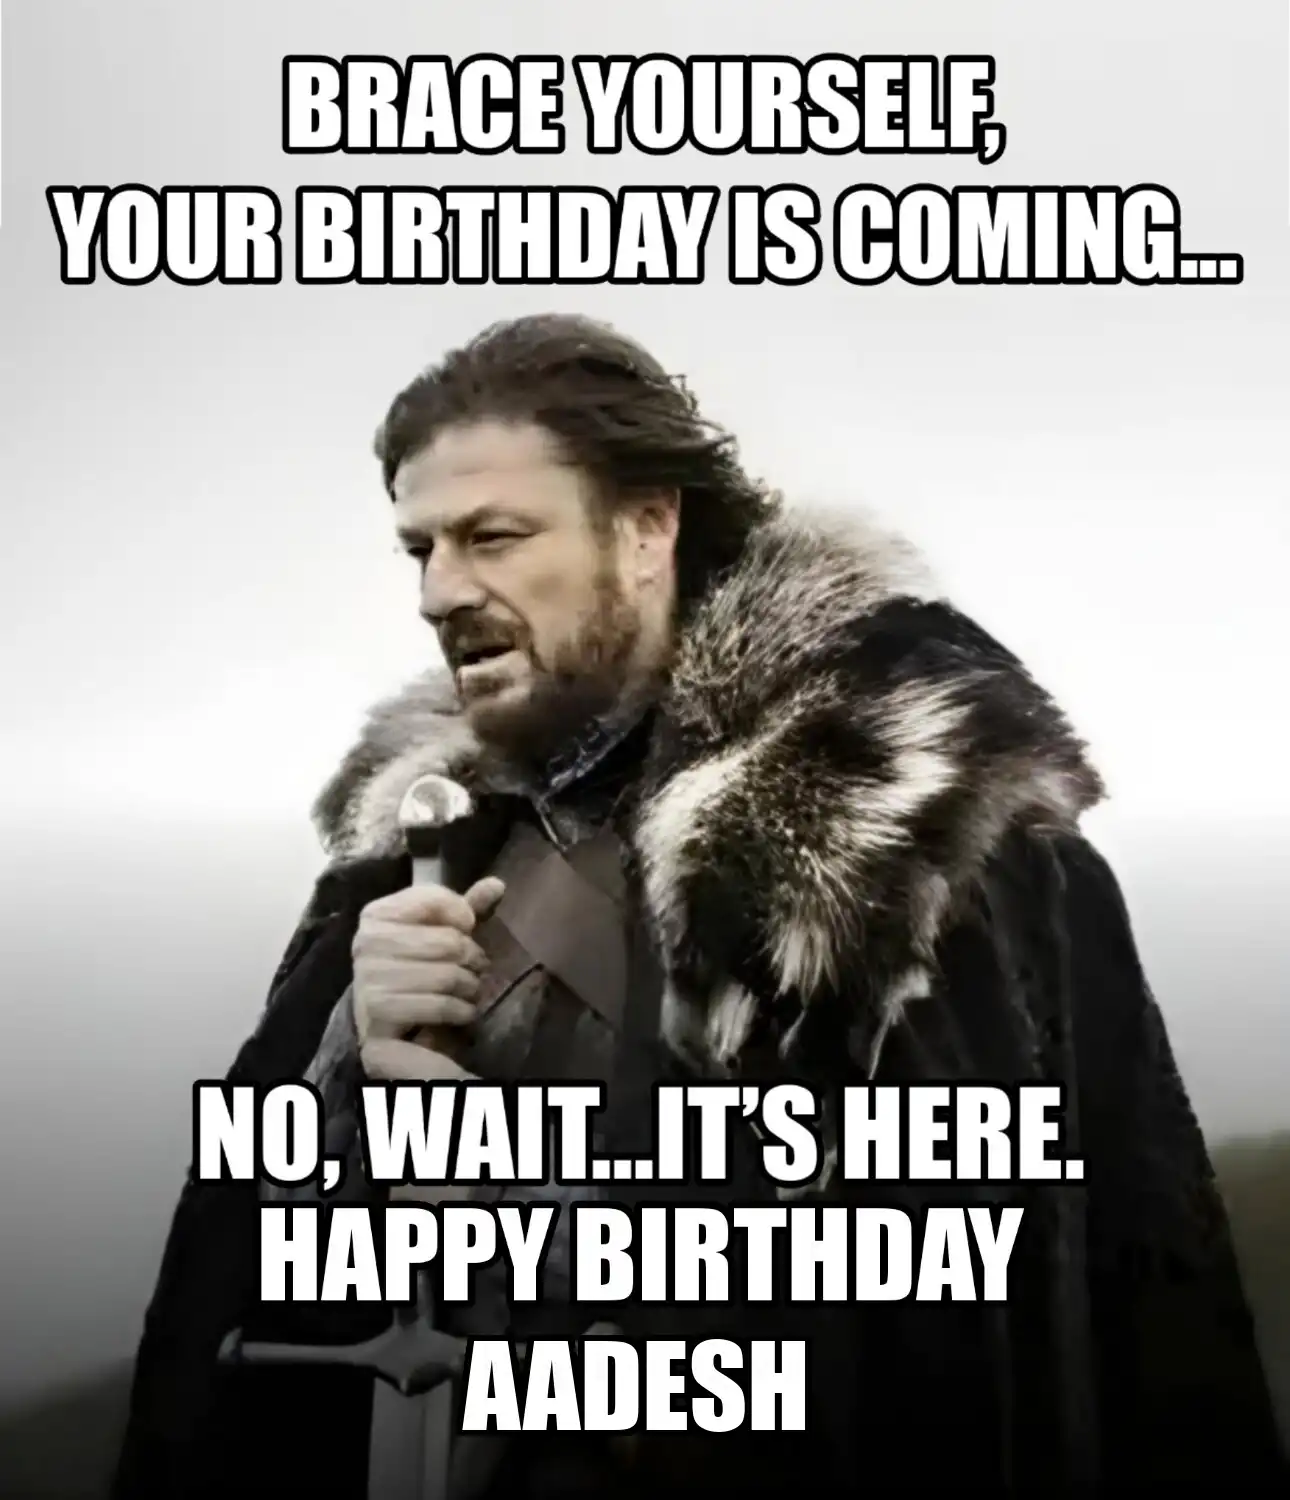 Happy Birthday Aadesh Brace Yourself Your Birthday Is Coming Meme